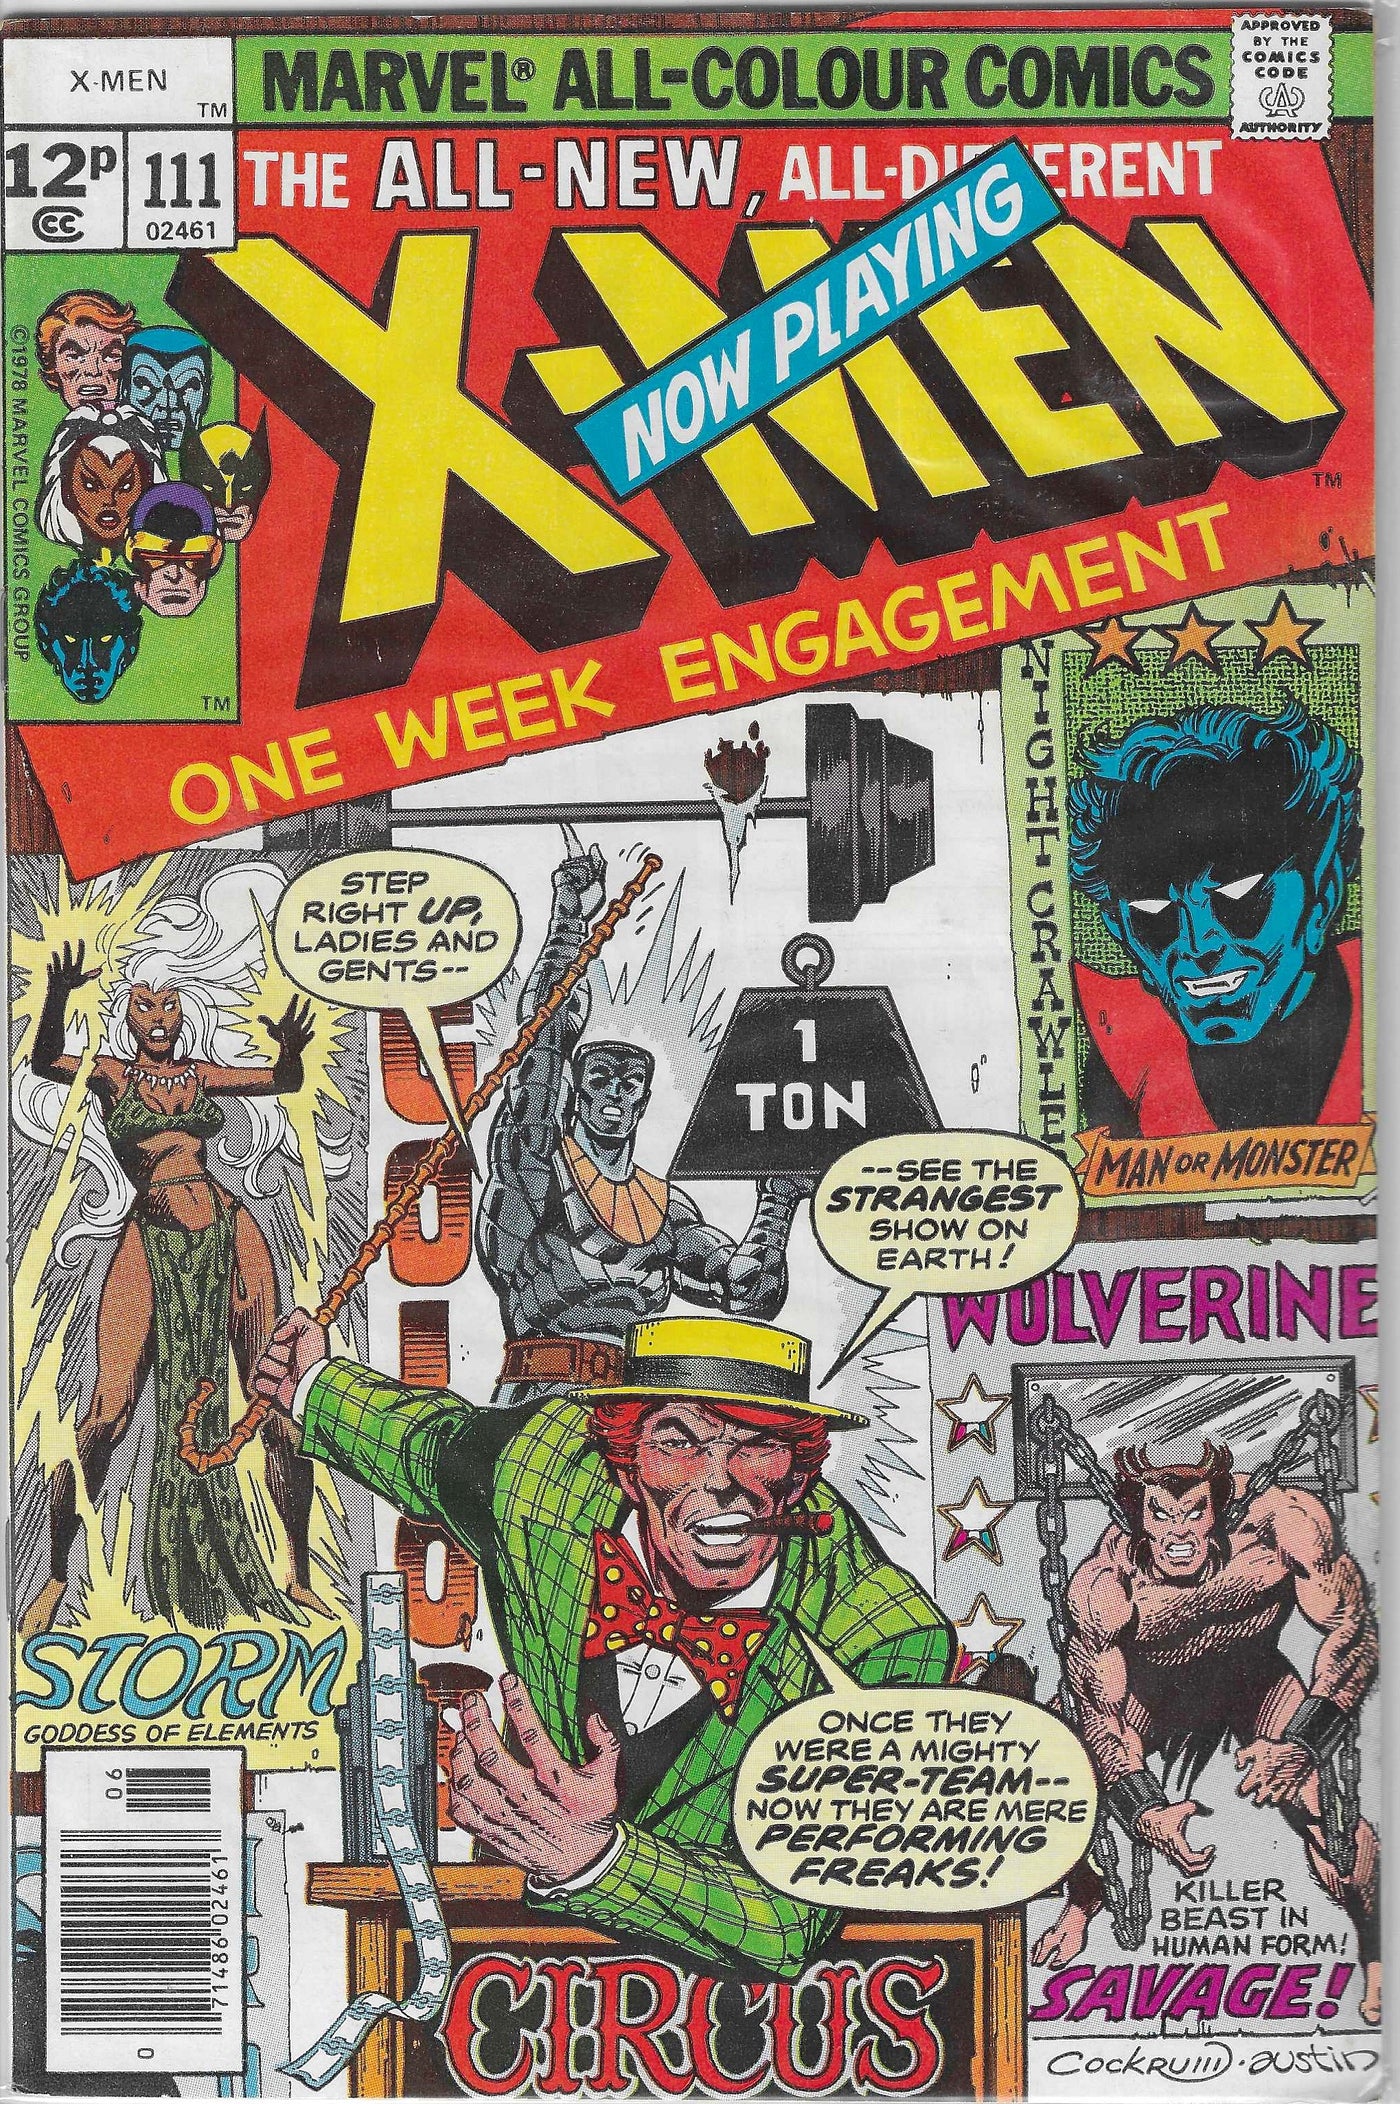 The X-Men (1978) #111